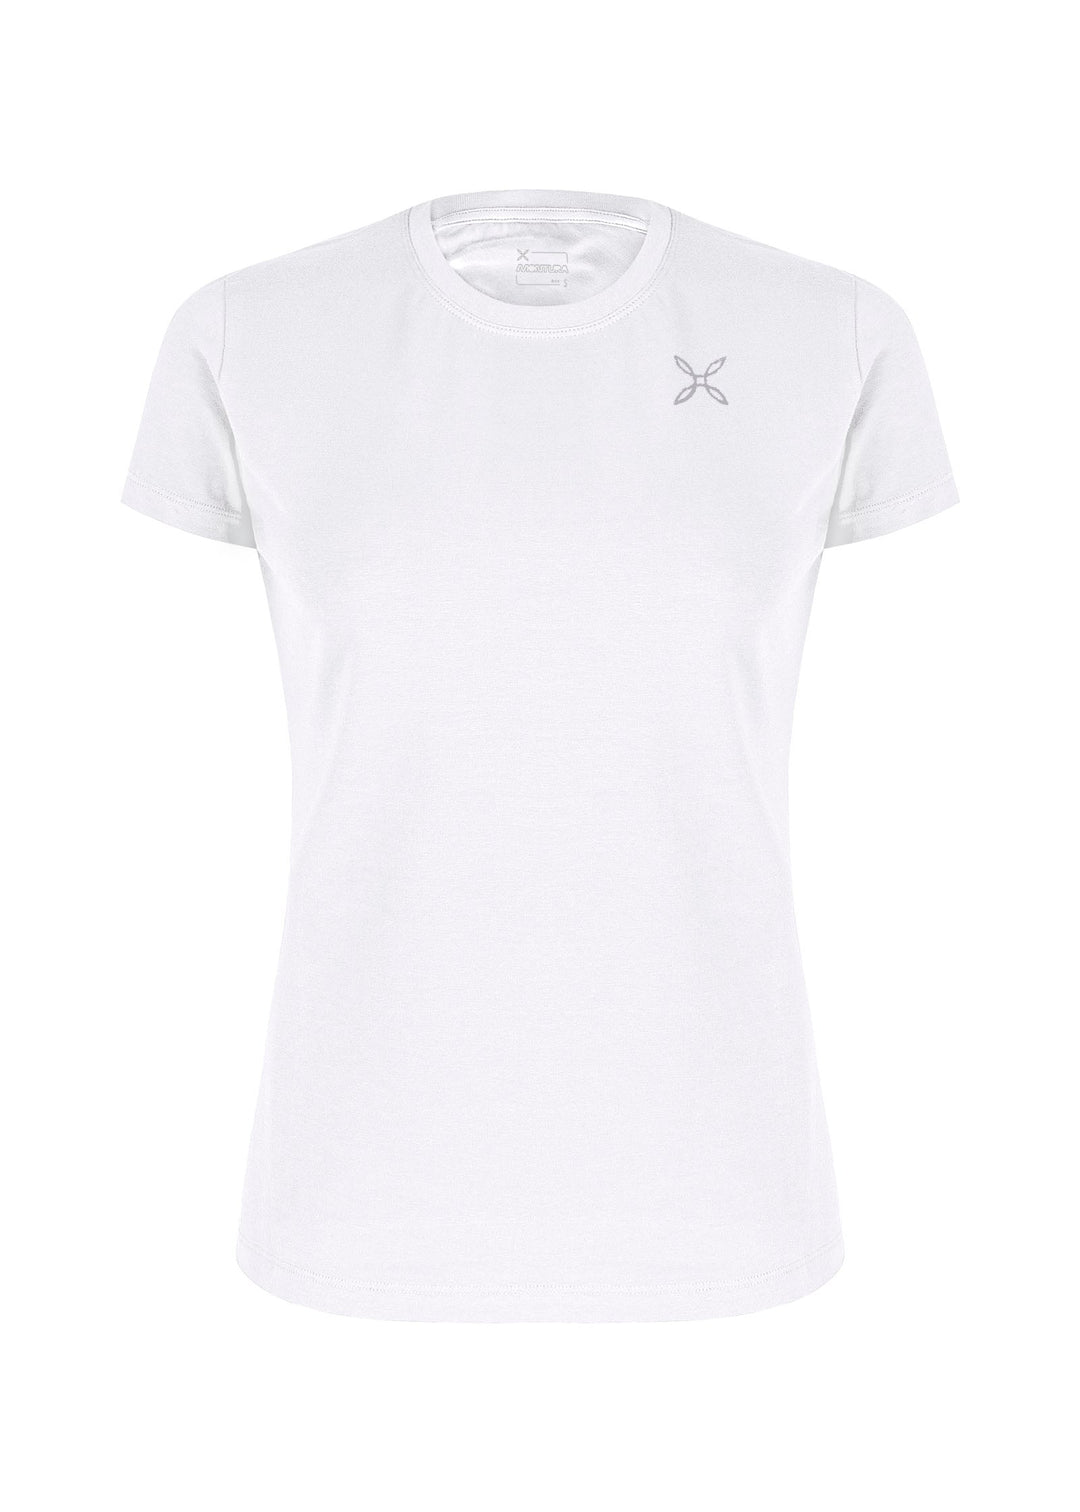 Pencil Logo T-Shirt Woman - Bianco (00) - Blogside